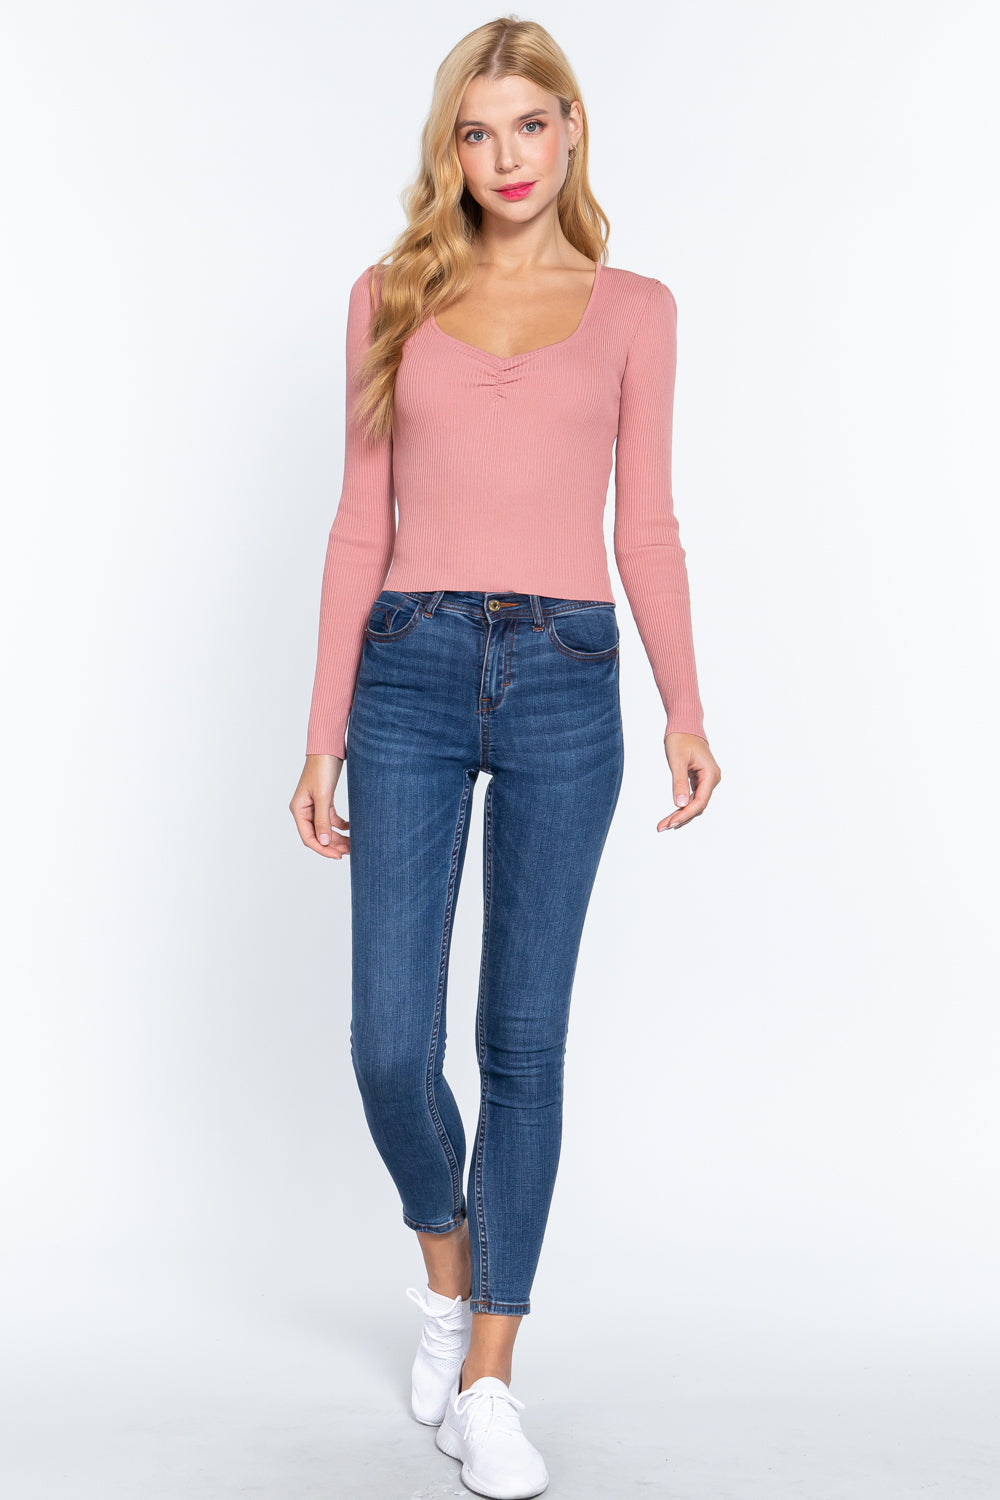 Pink Shirring Sweetheart Neck Long Sleeve Elegant Slim Fit Sweater Top Shirts & Tops jehouze 